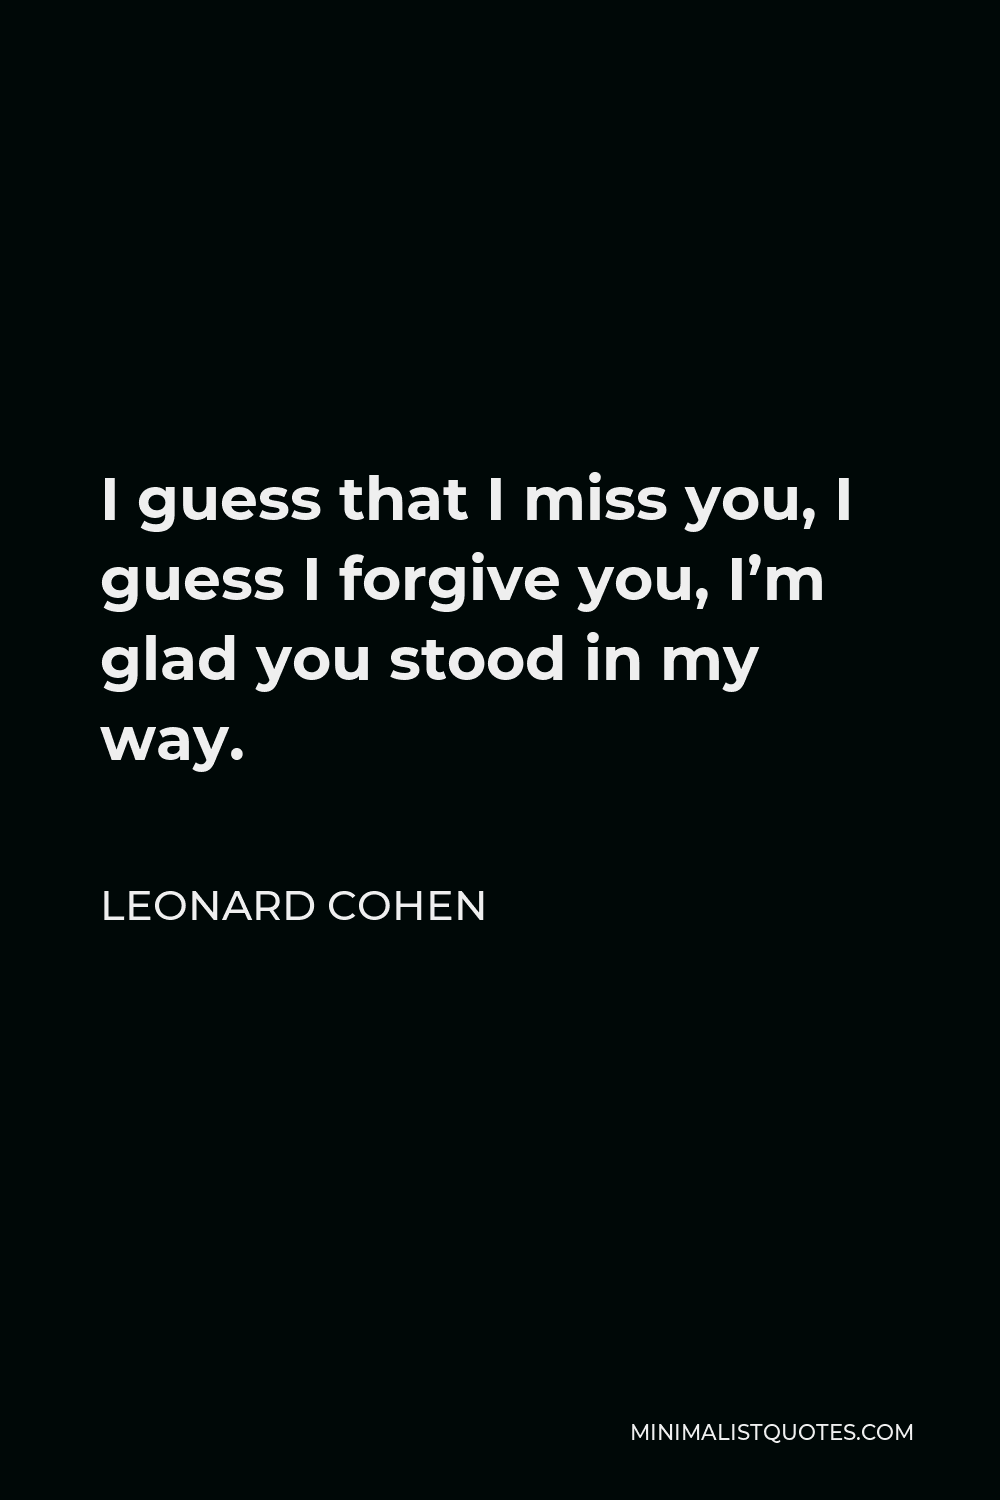 Leonard Cohen Quote: I guess that I miss you, I guess I forgive I'm glad you stood my way.